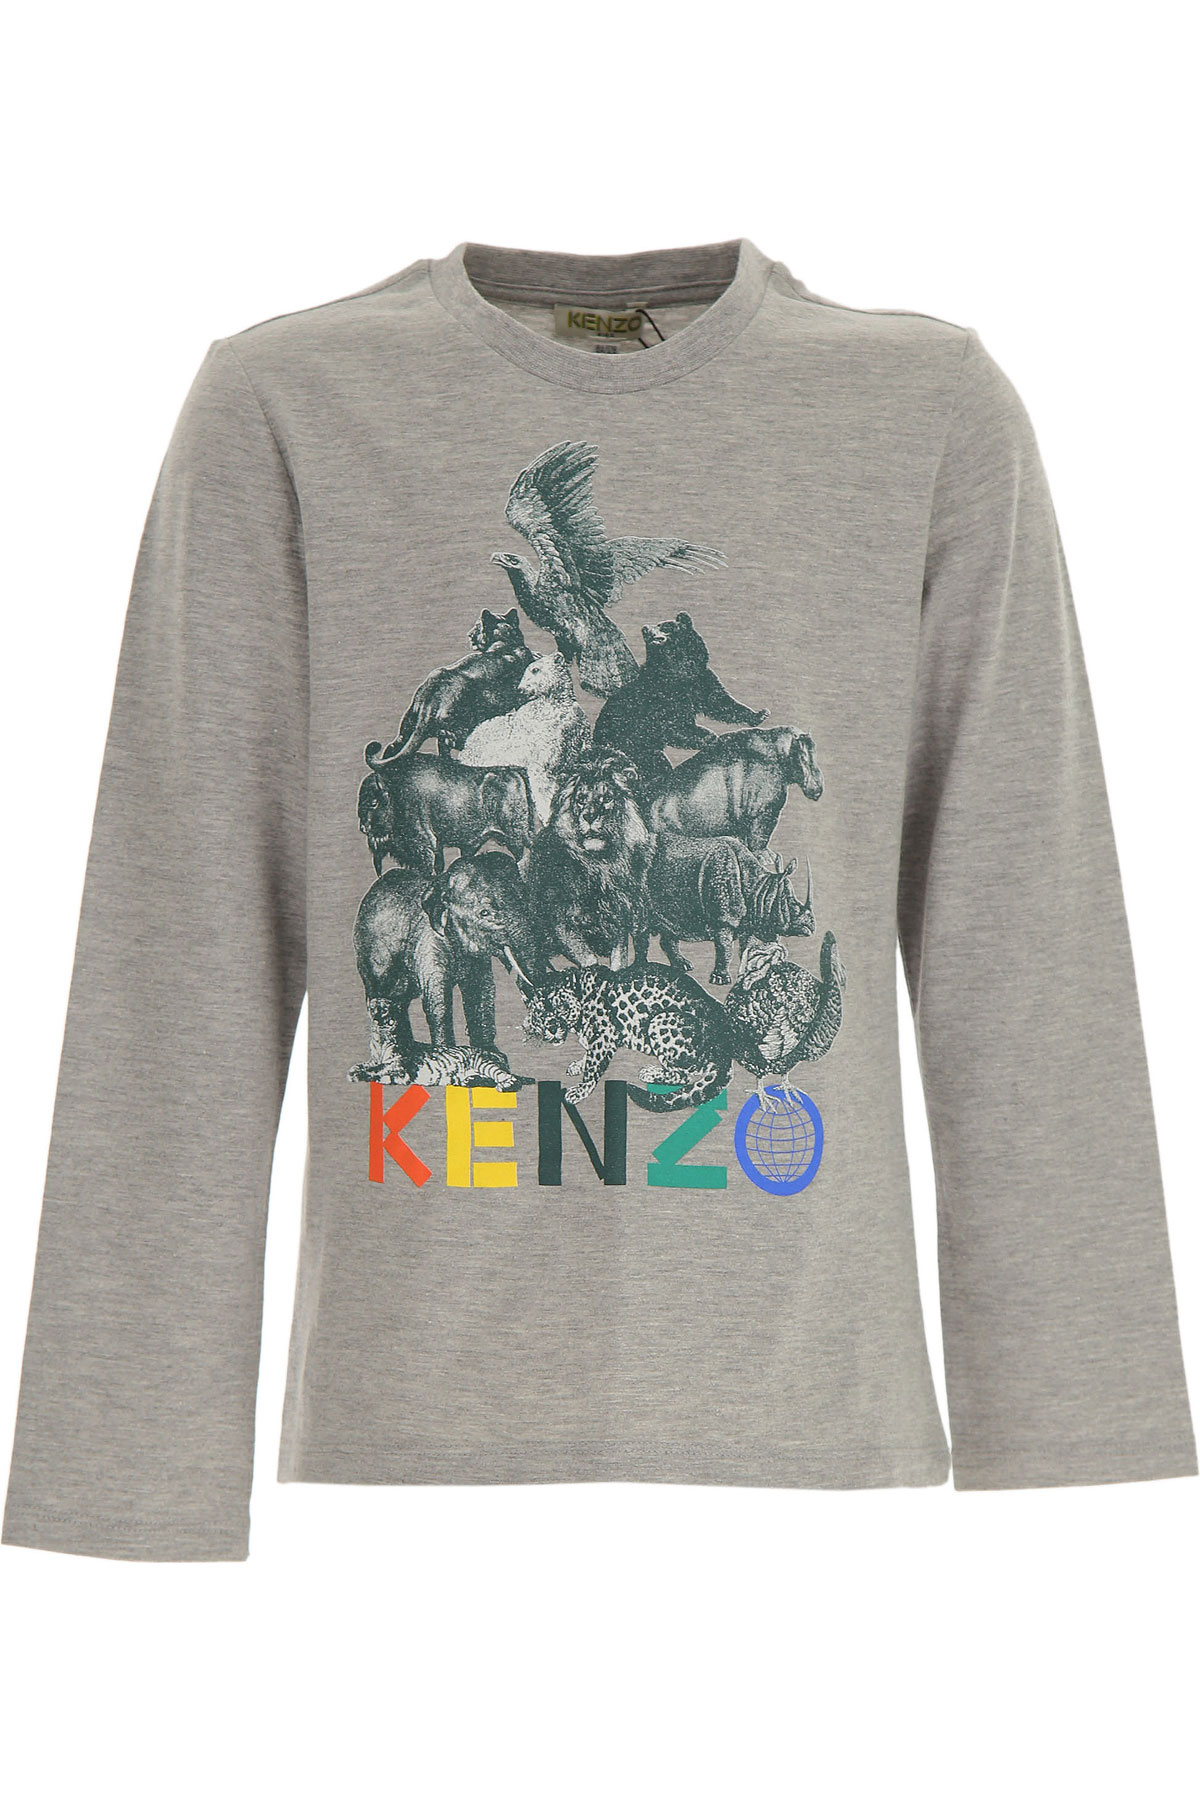 Kenzo Kinder T-Shirt für Jungen Günstig im Sale, Grau, Baumwolle, 2017, 10Y 12Y 14Y 8Y